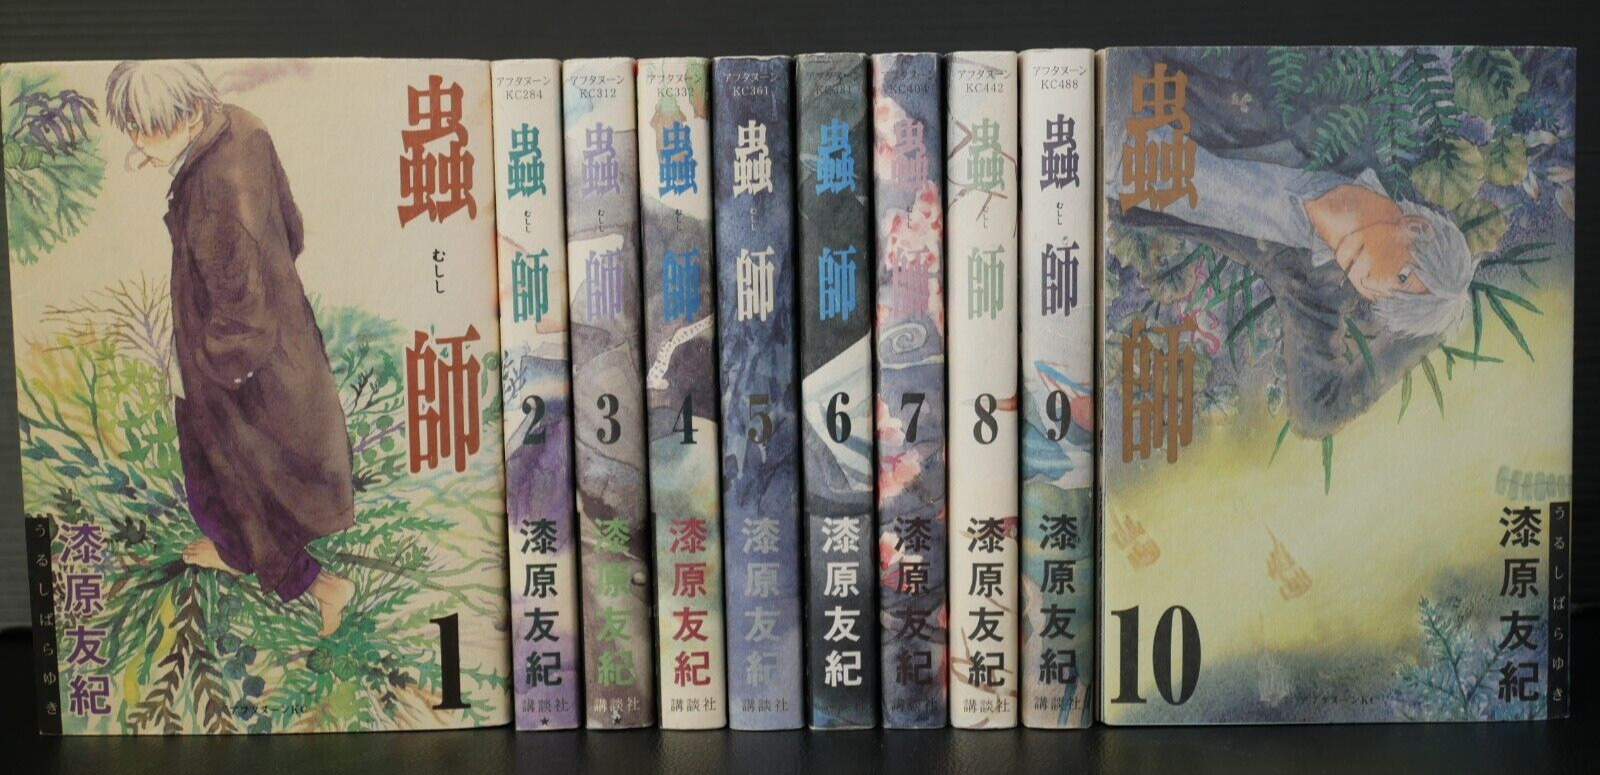 Mushishi Manga Vol.1-10 Complete Set by Yuki Urushibara - from JAPAN